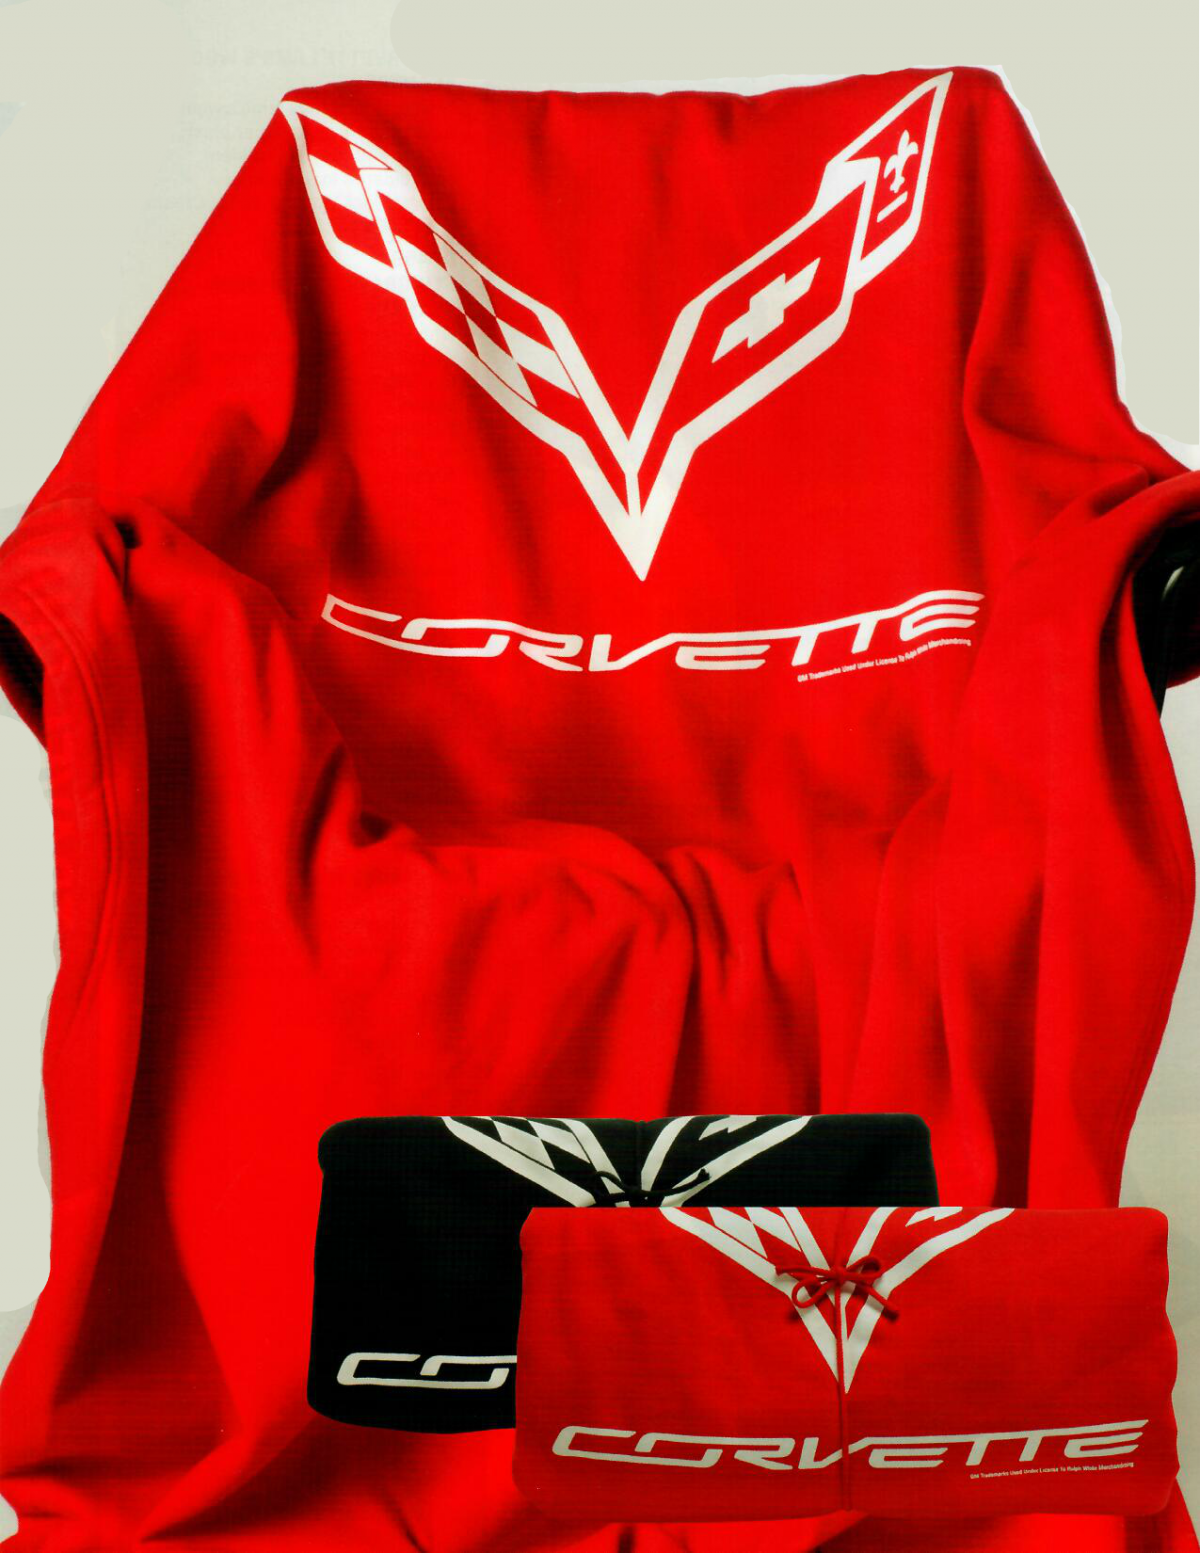 Chevrolet C7 Corvette Stingray Sweatshirt Fleece Blanket - 54"x84" - Red or Black